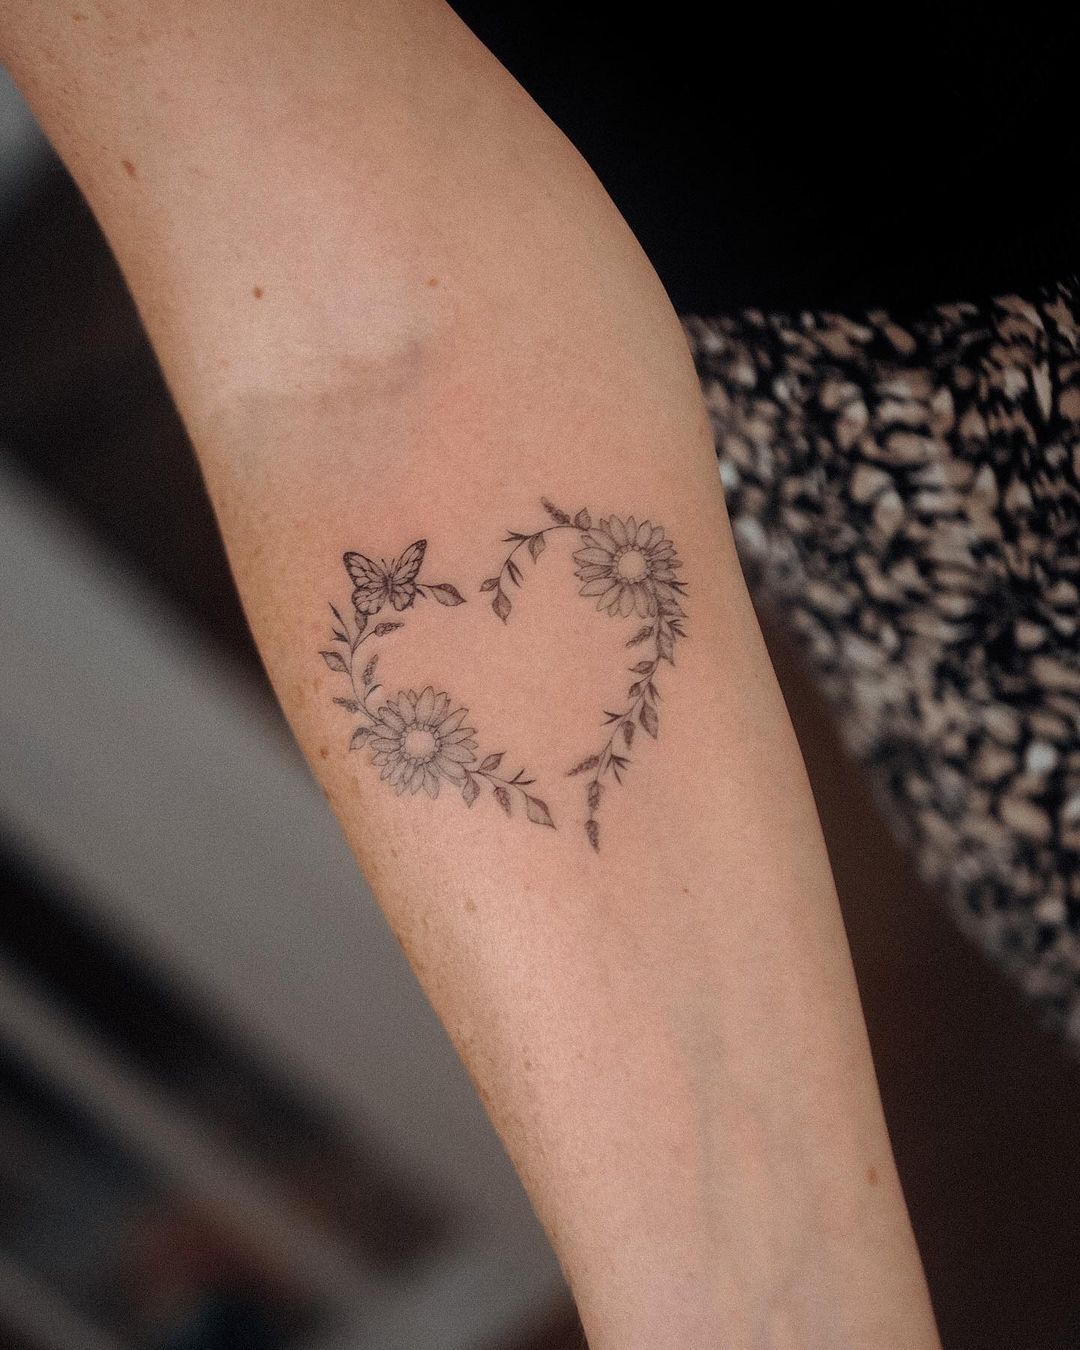 Sunflower Tattoo 